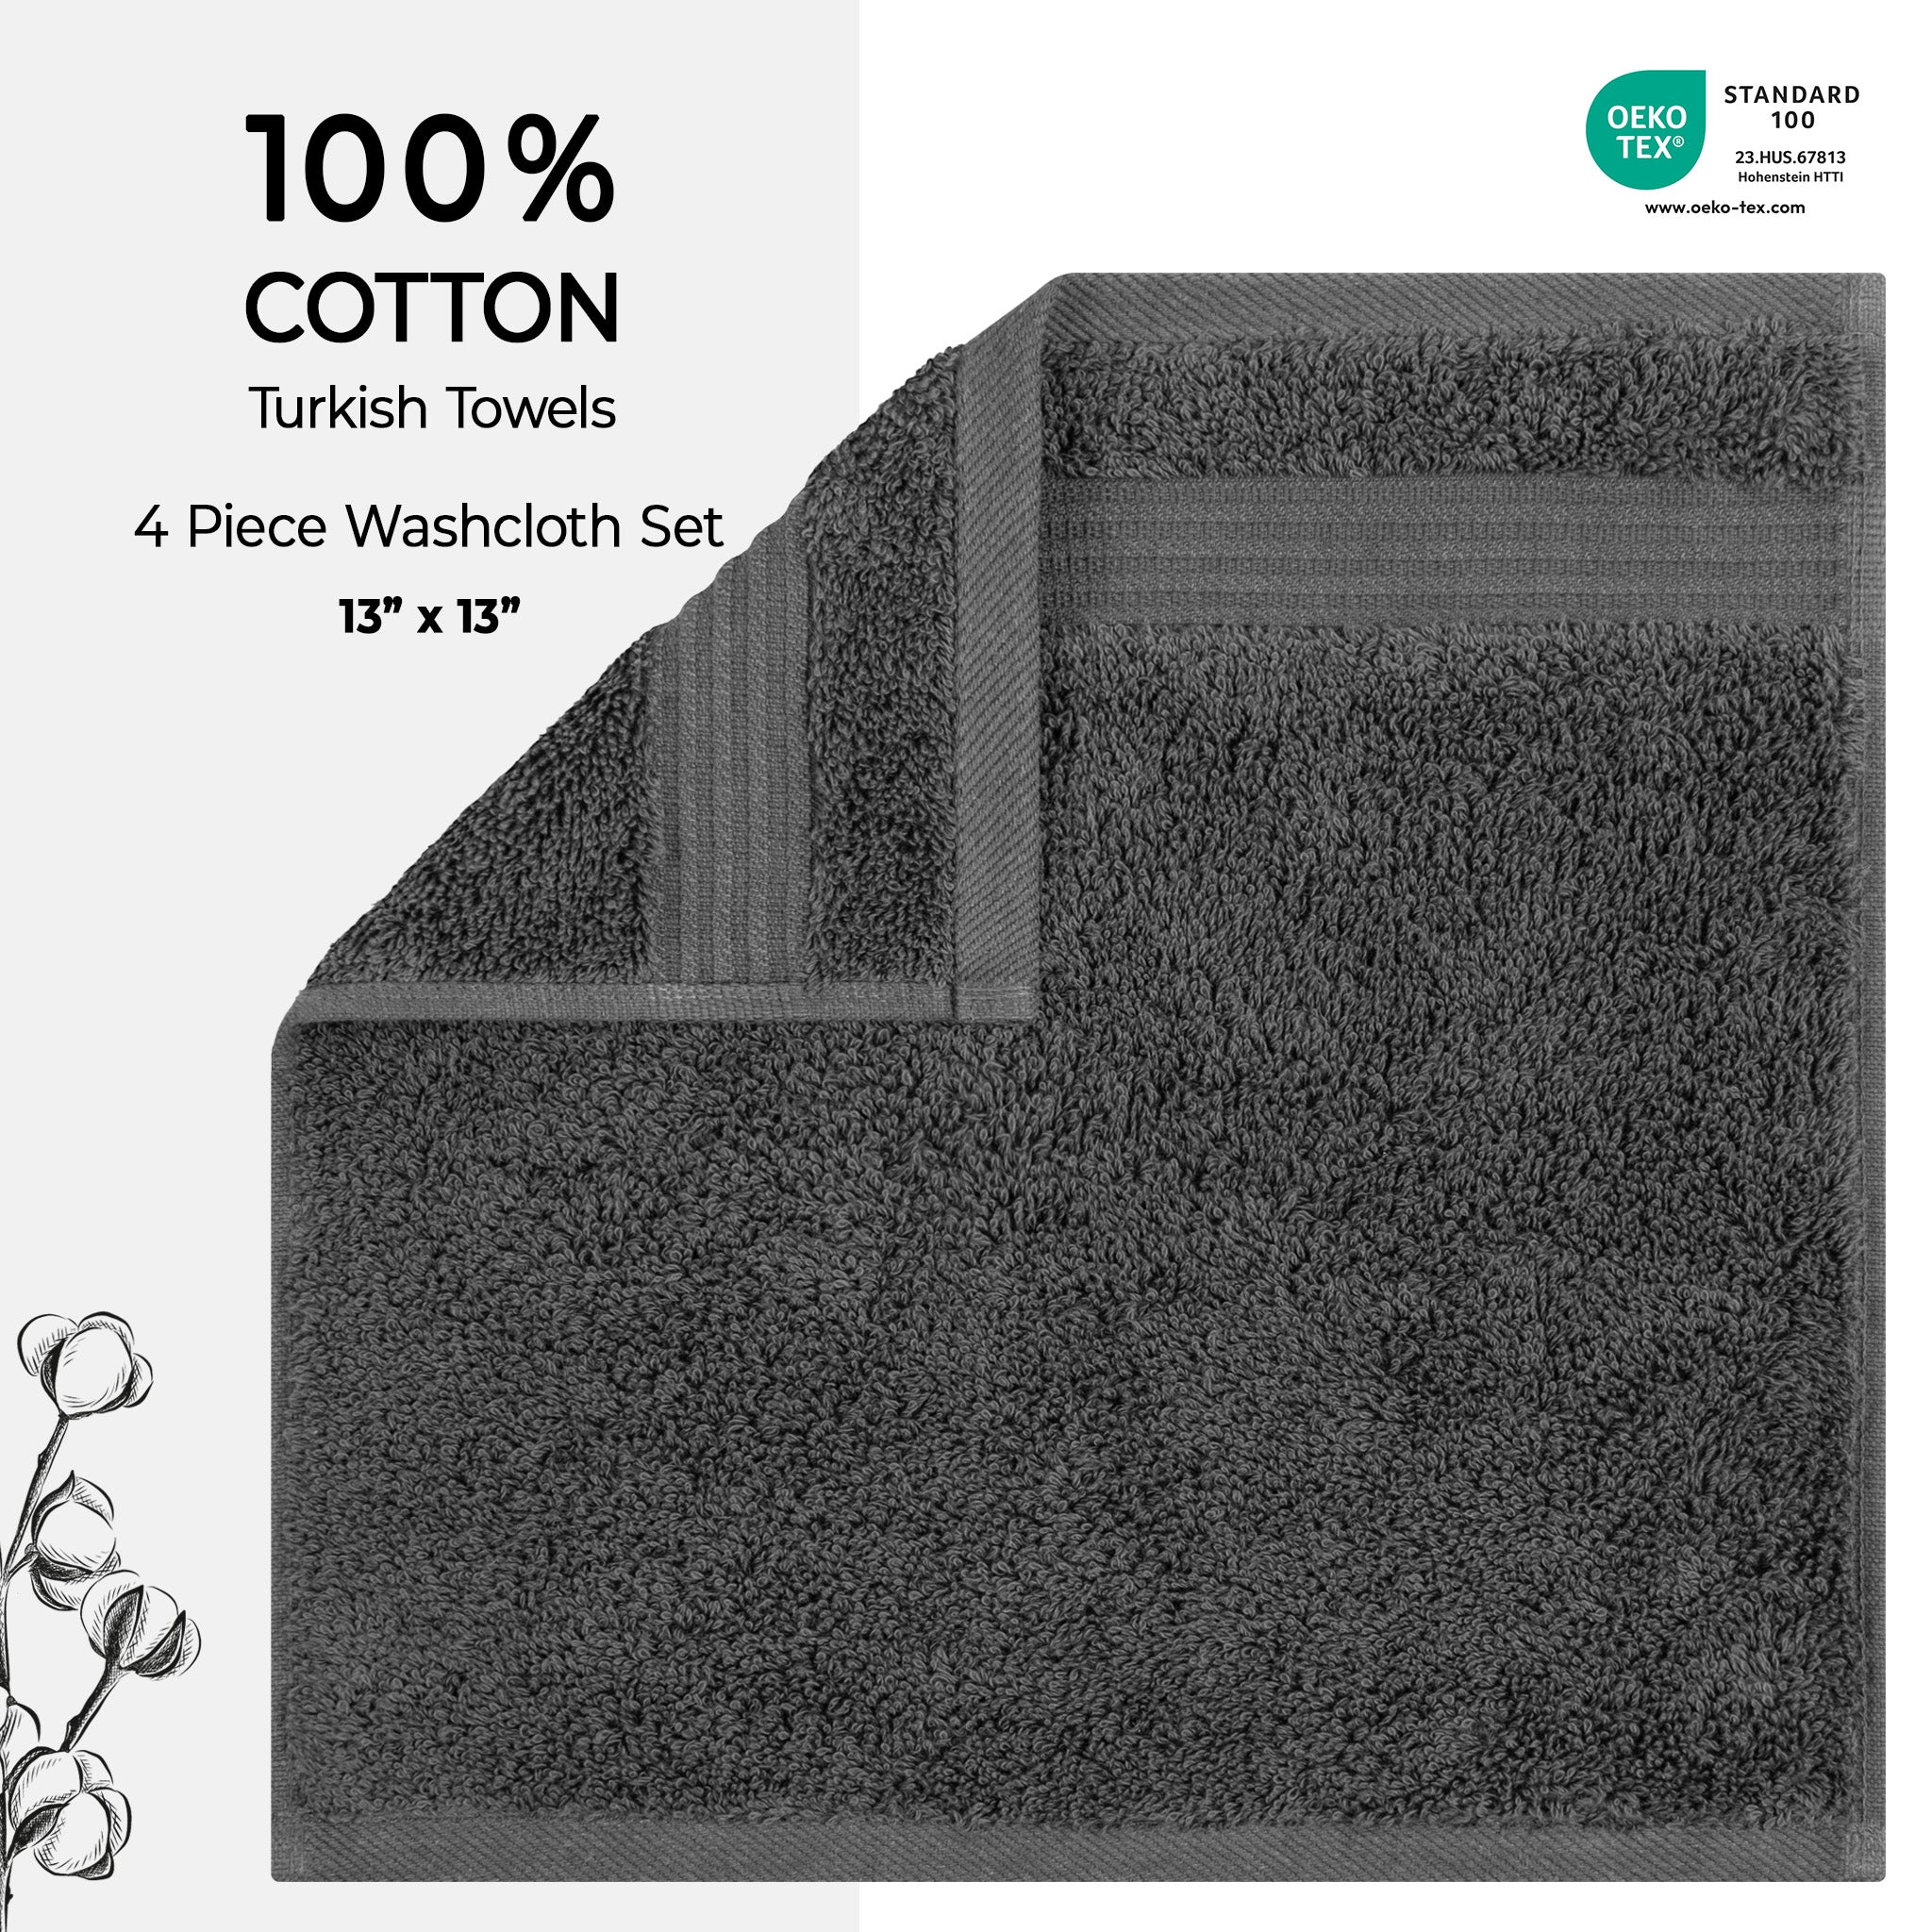 American Soft Linen Bekos 100% Cotton Turkish Towels, 4 Piece Washcloth Towel Set -gray-02